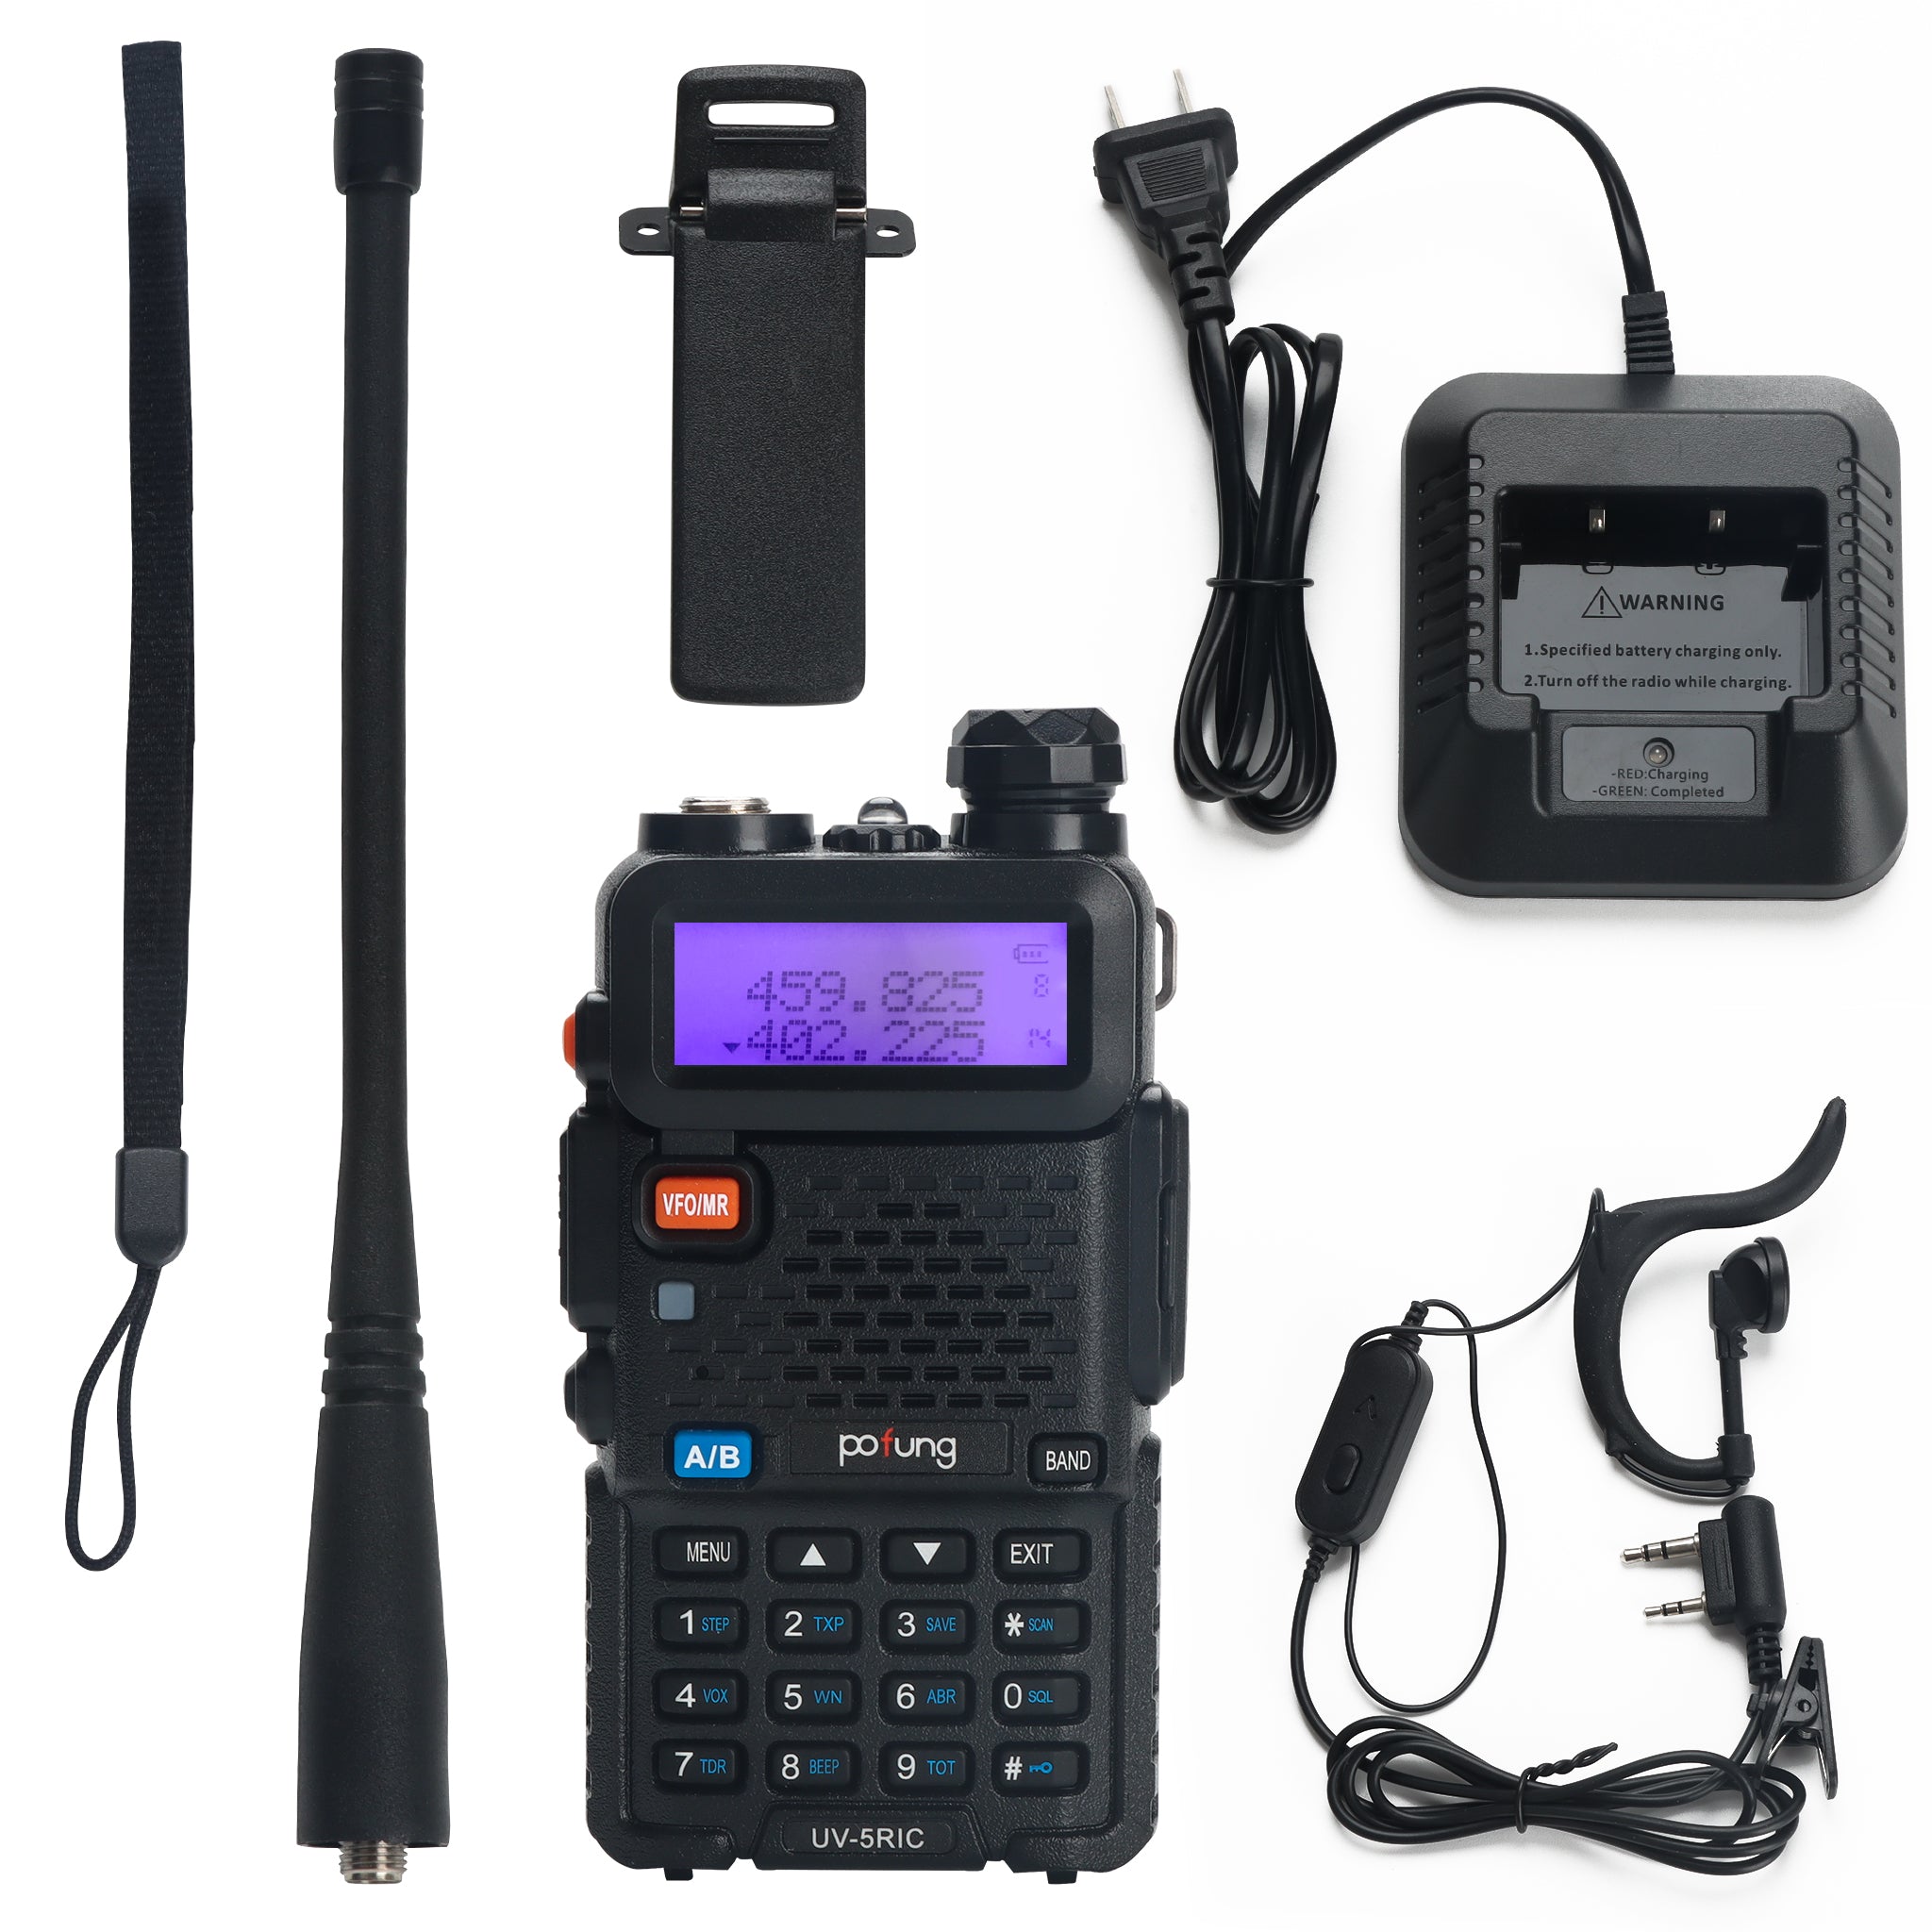 POFUNG BAOFENG UV-5RIC VHF 144-148 MHZ UHF 430-450 MHZ DUAL BAND TWO WAY HAM RADIO - Classic Black